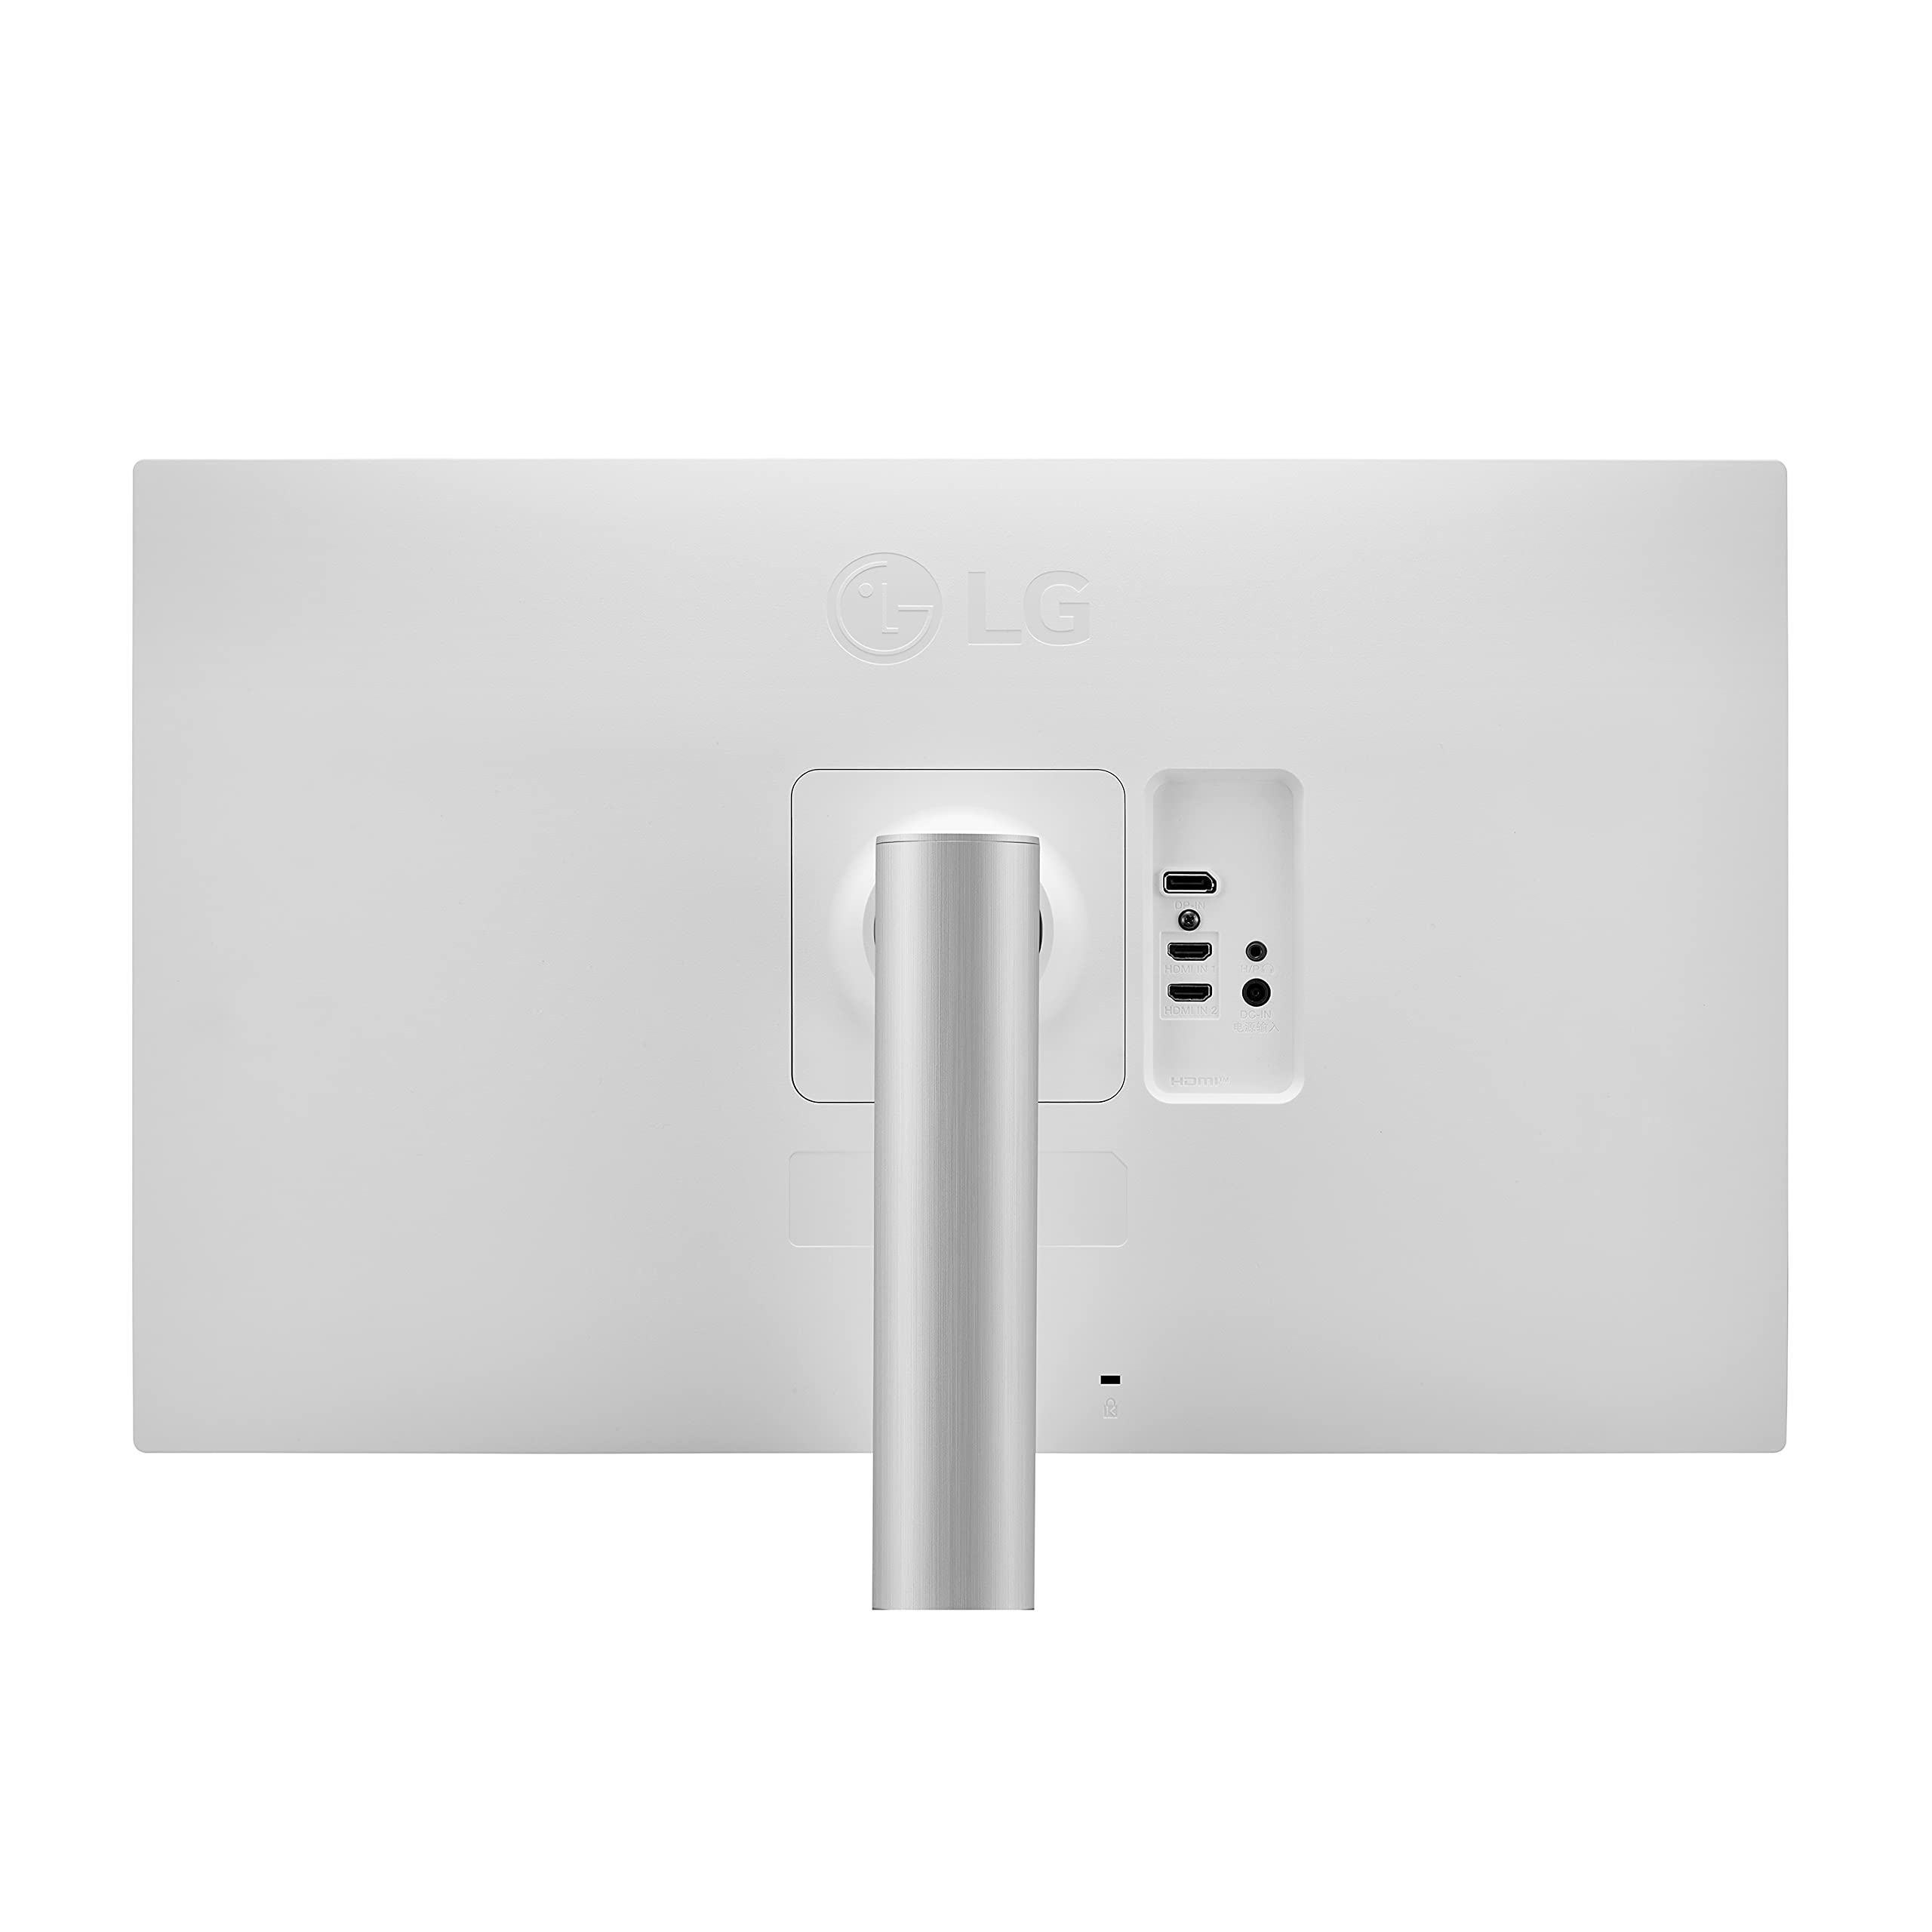 LG 27UP650-W.AUS Monitor 27” UHD (3840 x 2160) IPS Display, VESA DisplayHDR 400, DCI-P3 95% Color Gamut, 3-Side Virtually Borderless Display, Height/Pivot/Tilt Adjustable Stand – Silver